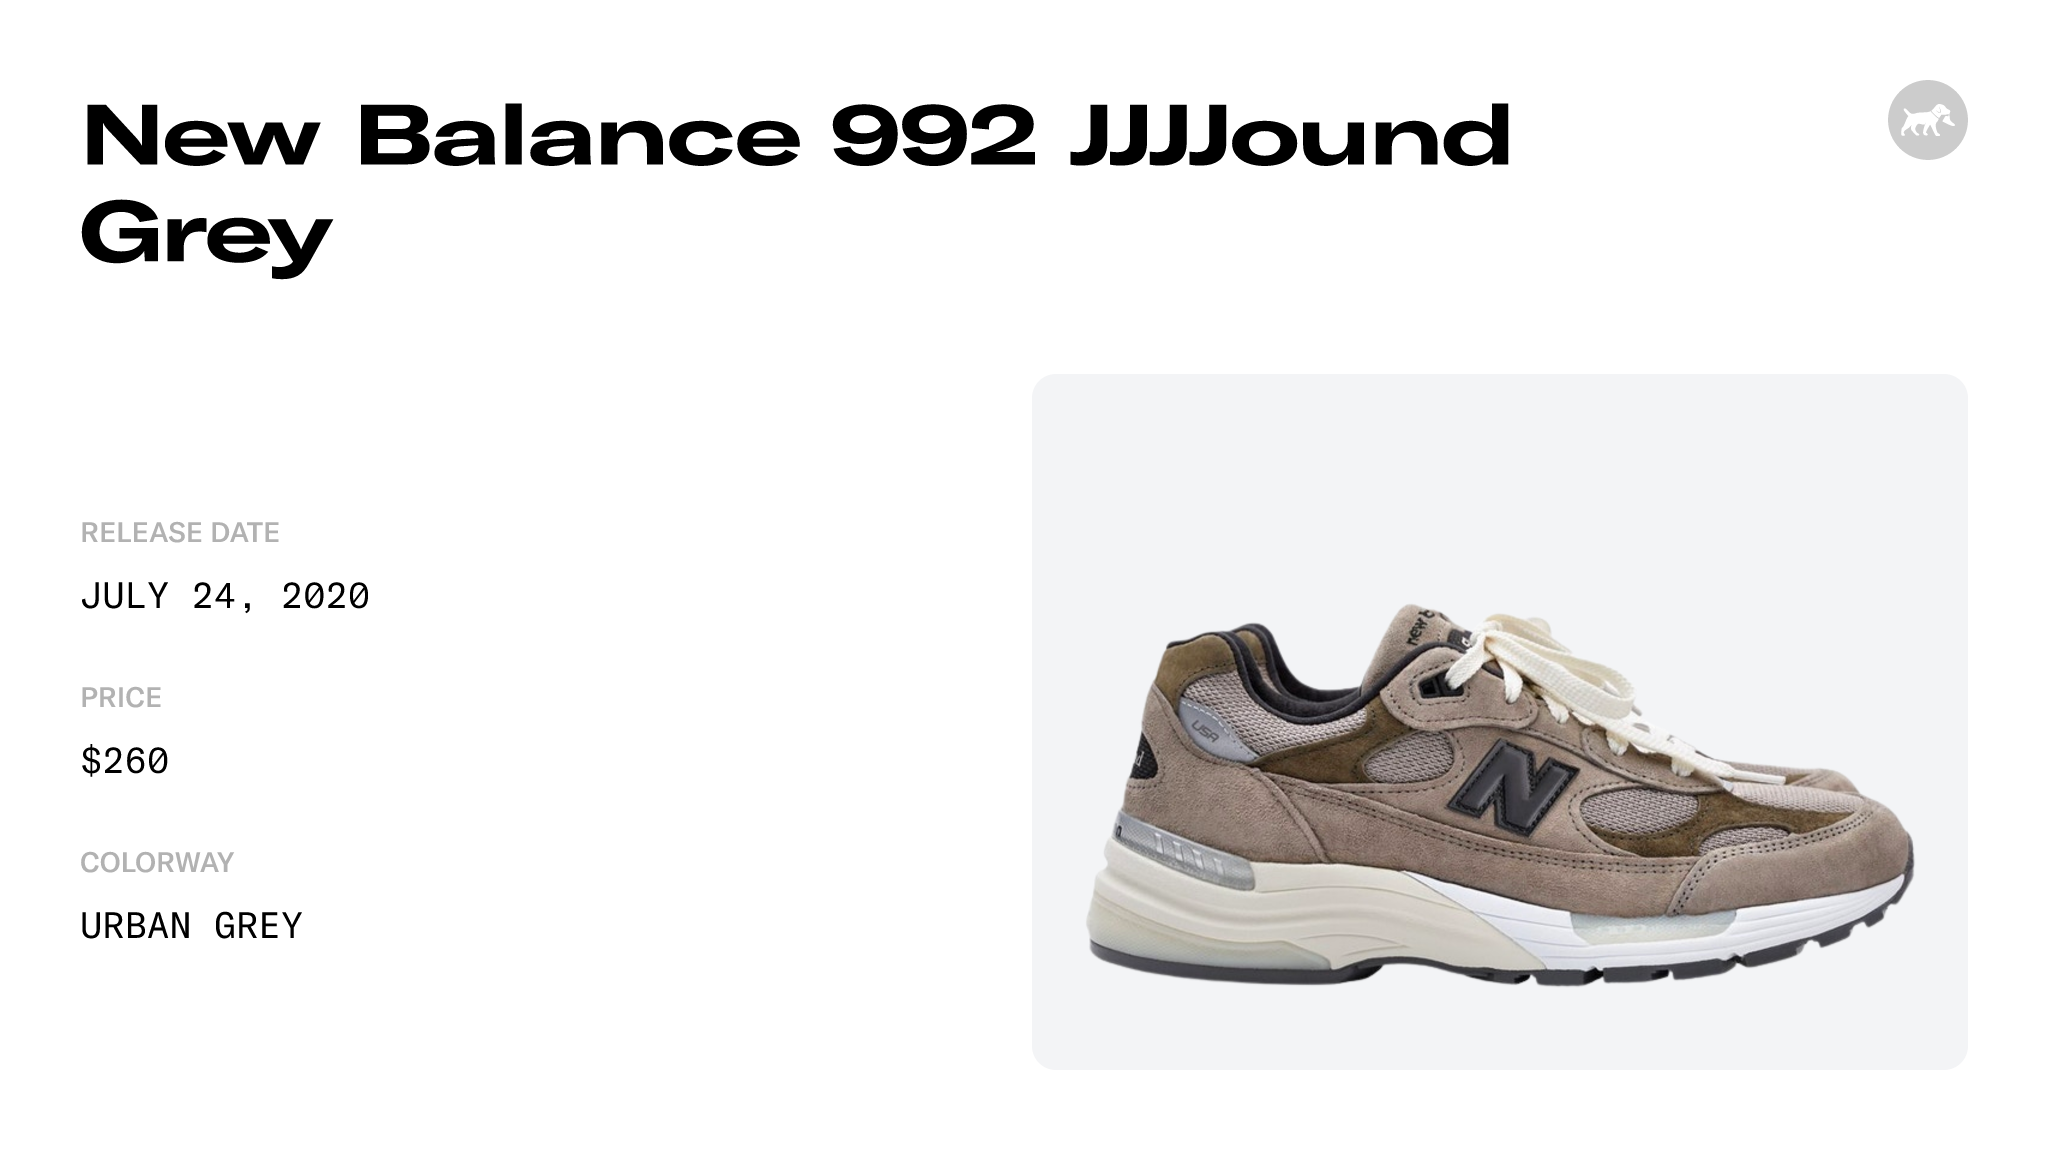 New Balance 992 JJJJound Grey - AMUS990MC3 Raffles and Release Date